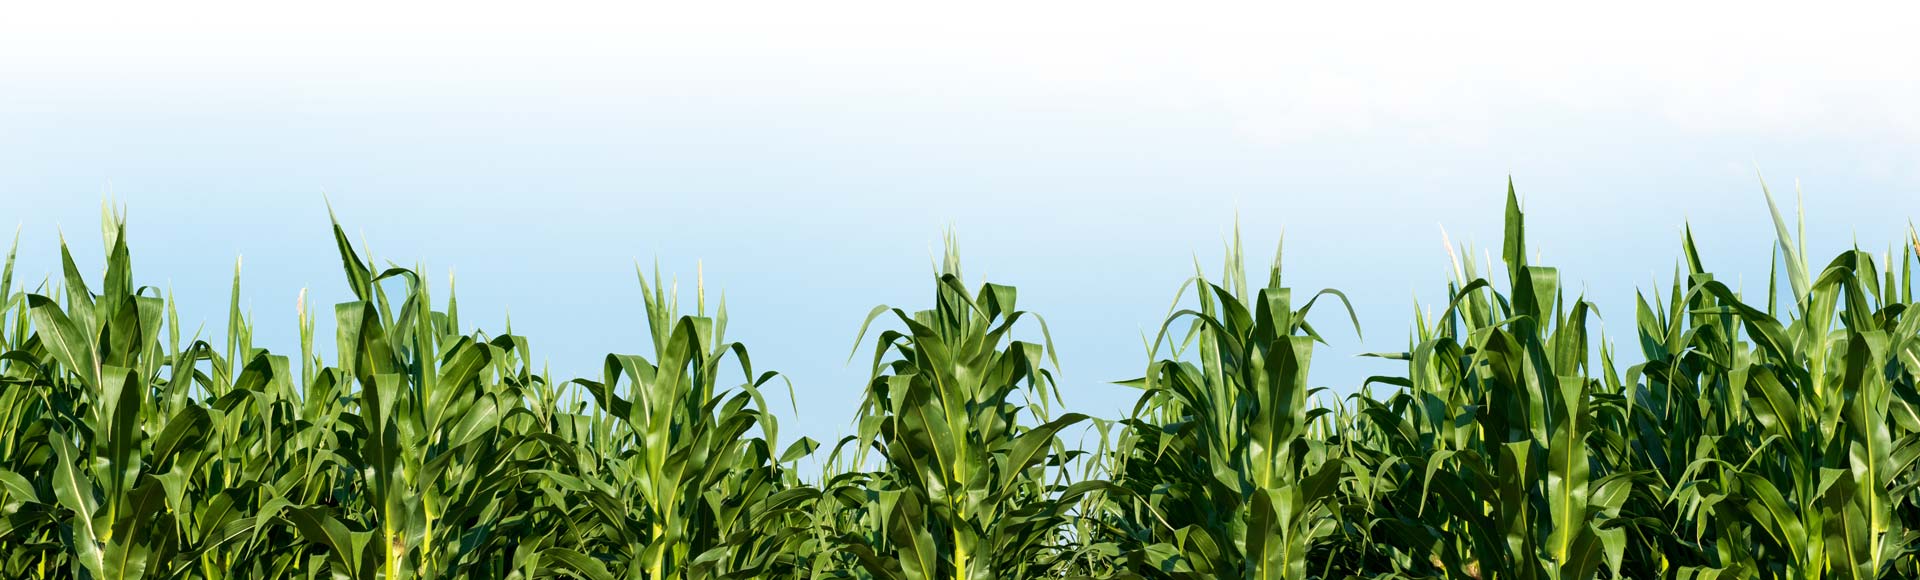 Photo of corn stalks